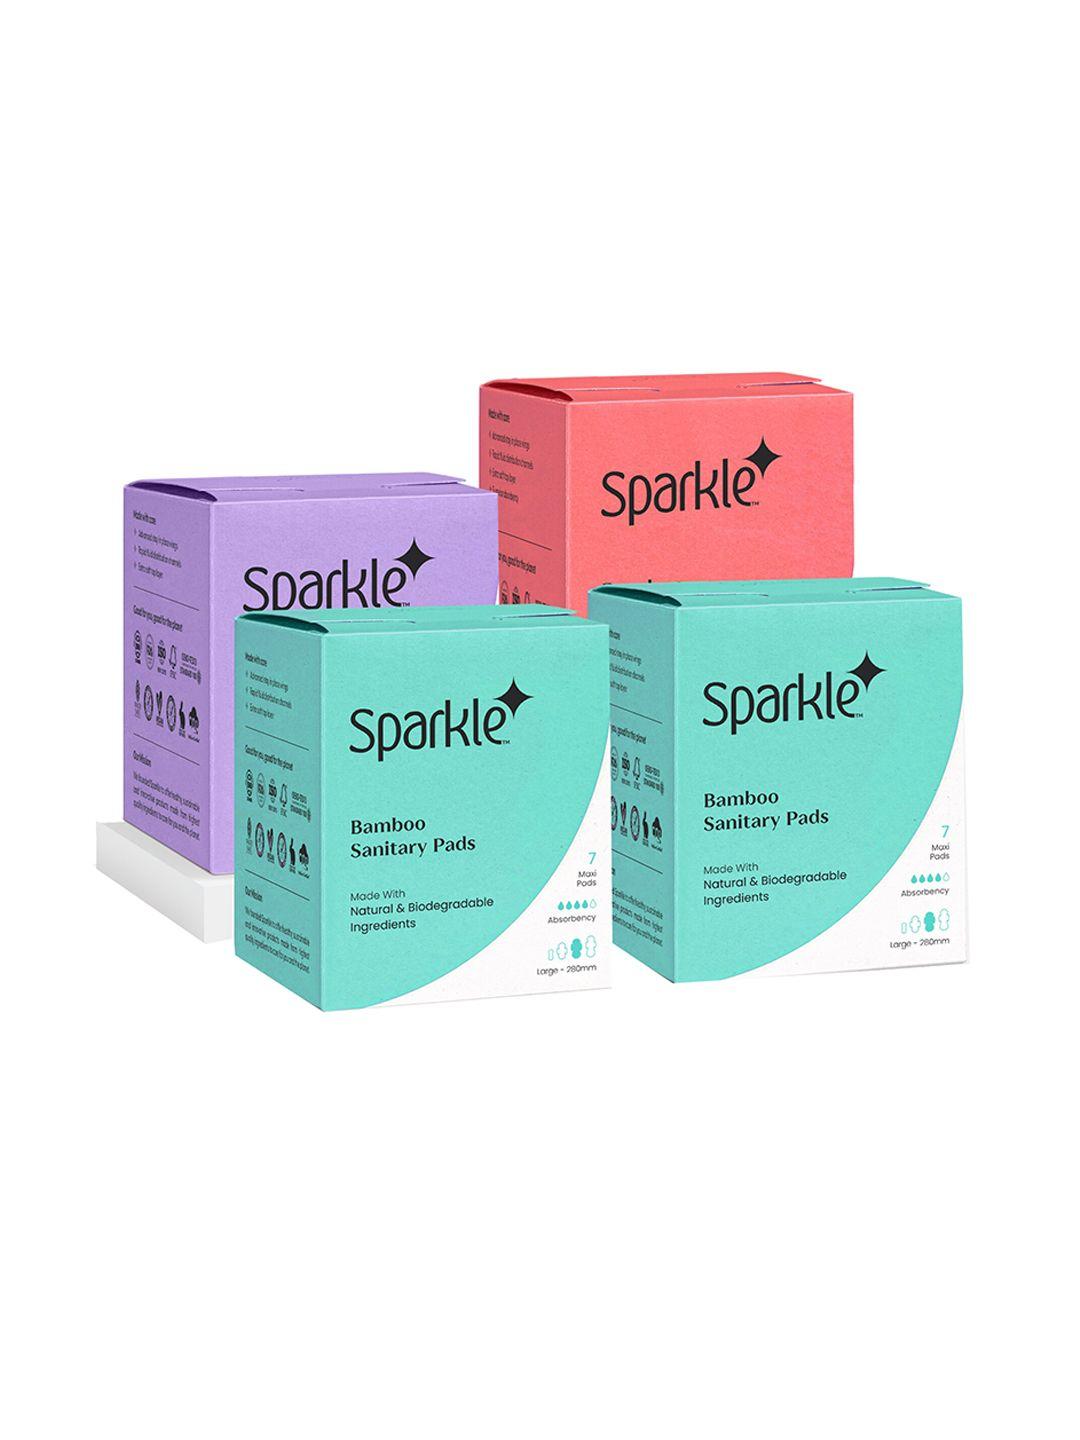 sparkle set of 4 bamboo sanitary pads 7 pcs each - 2 large + 1 overnight + 1 regular